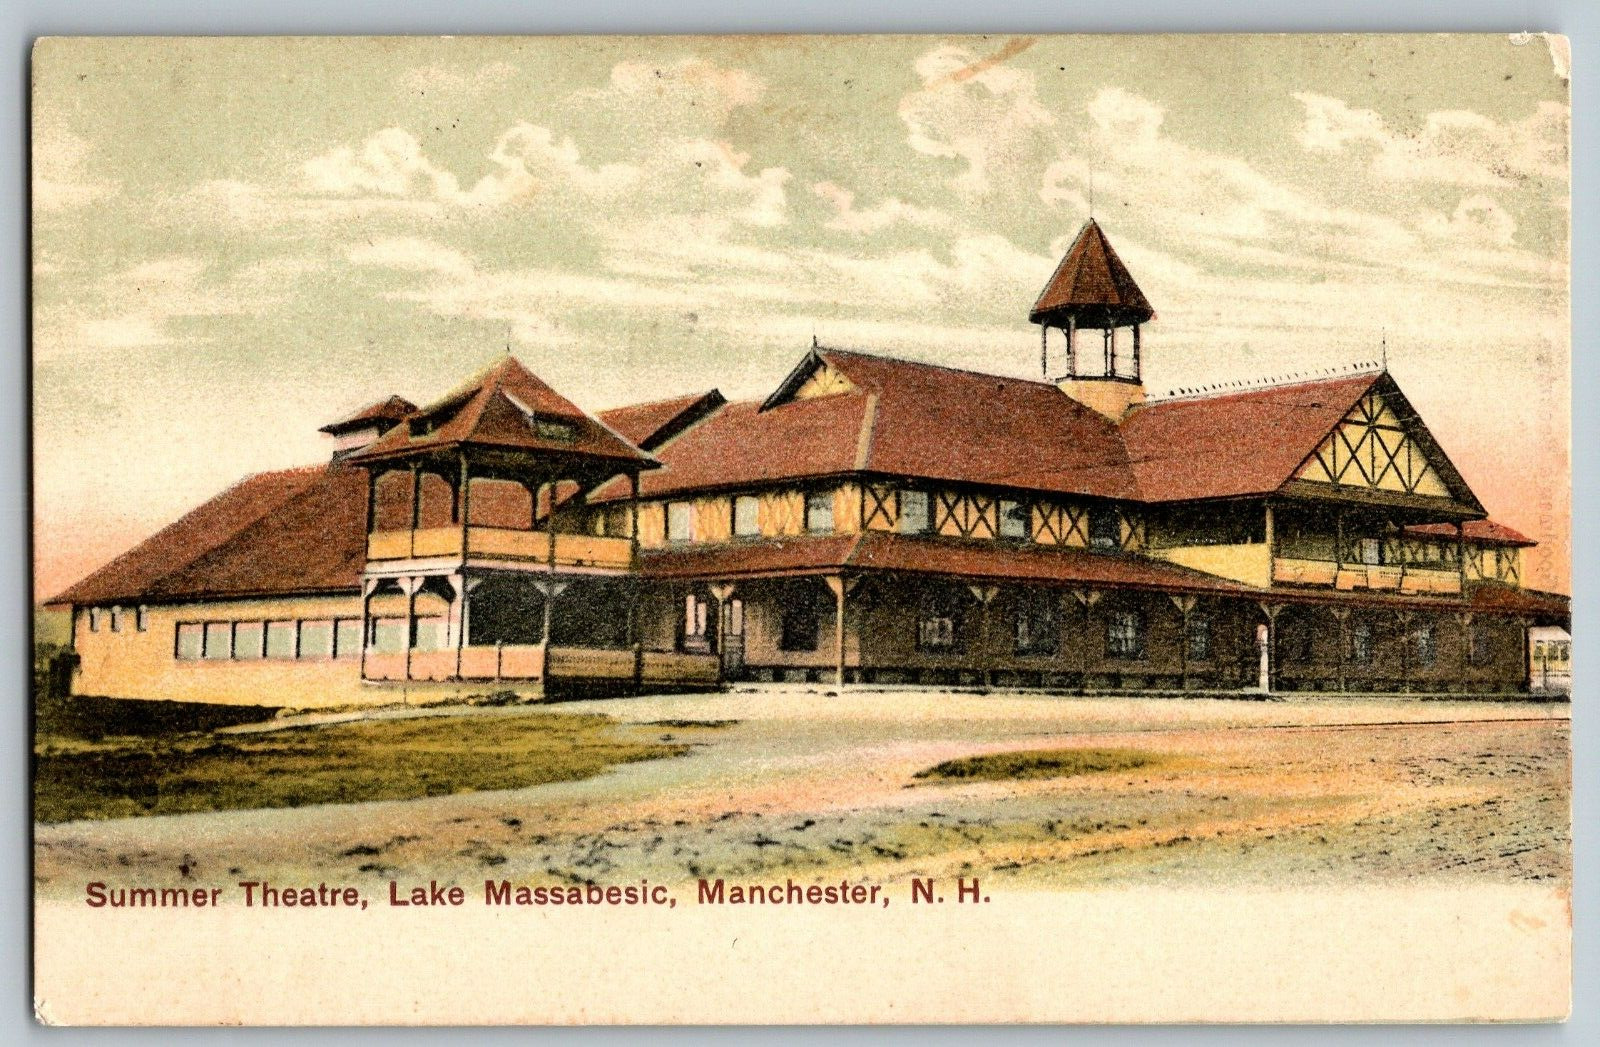 Manchester, NH - Summer Theatre, Lake Massabesic - Vintage Postcard - Posted